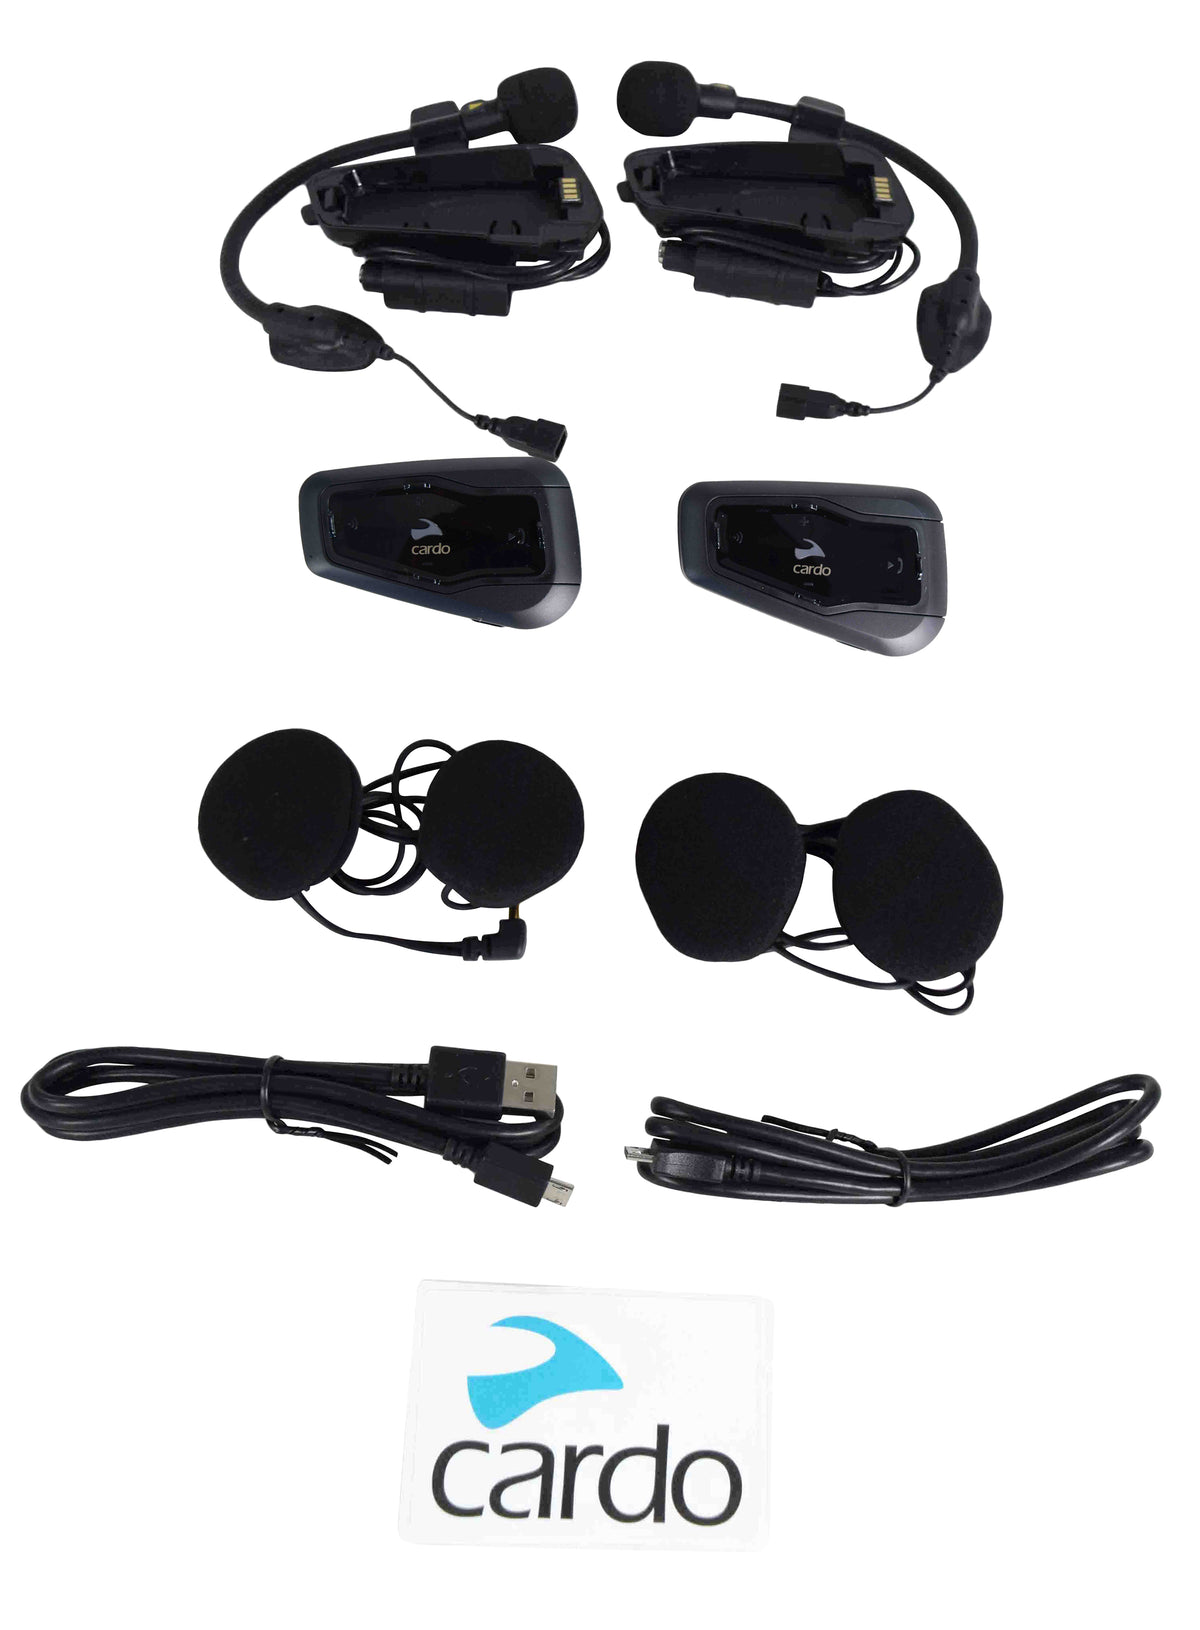 Cardo Scala FREECOM 1 DUO Bluetooth Motorcycle Helmet Communication Headset